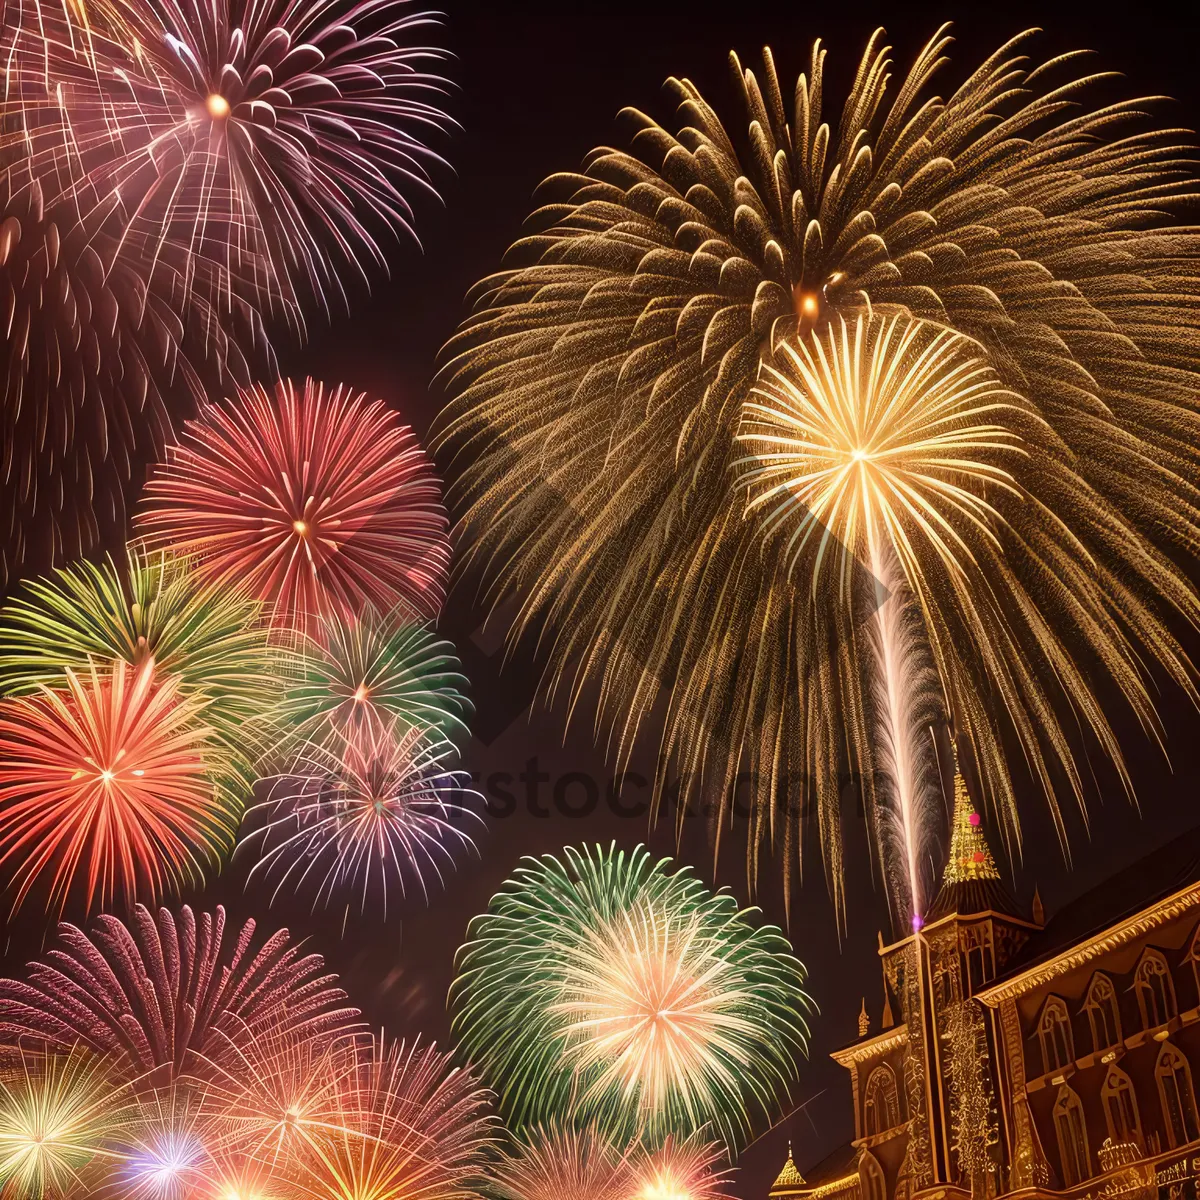 Picture of Vibrant Fireworks Illuminate Festive Night Sky